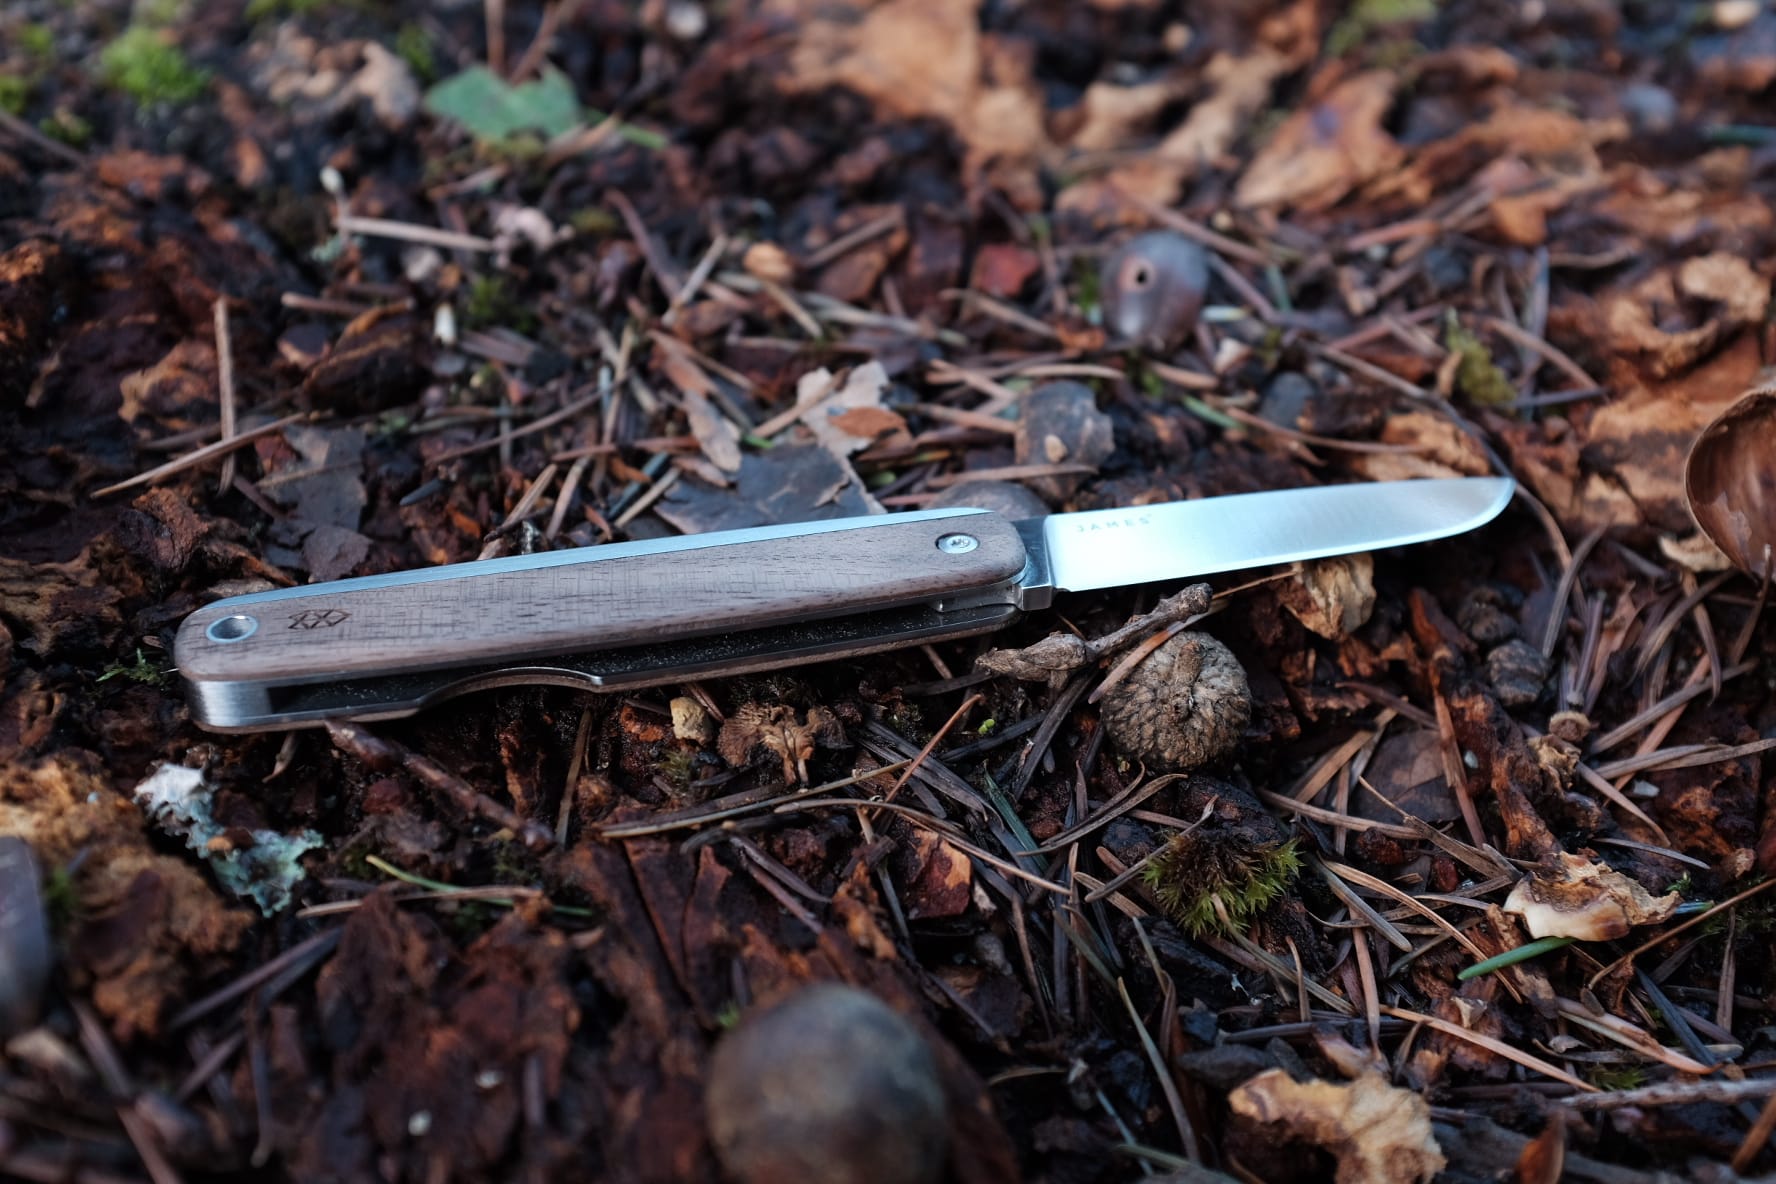 James Brand County Knife